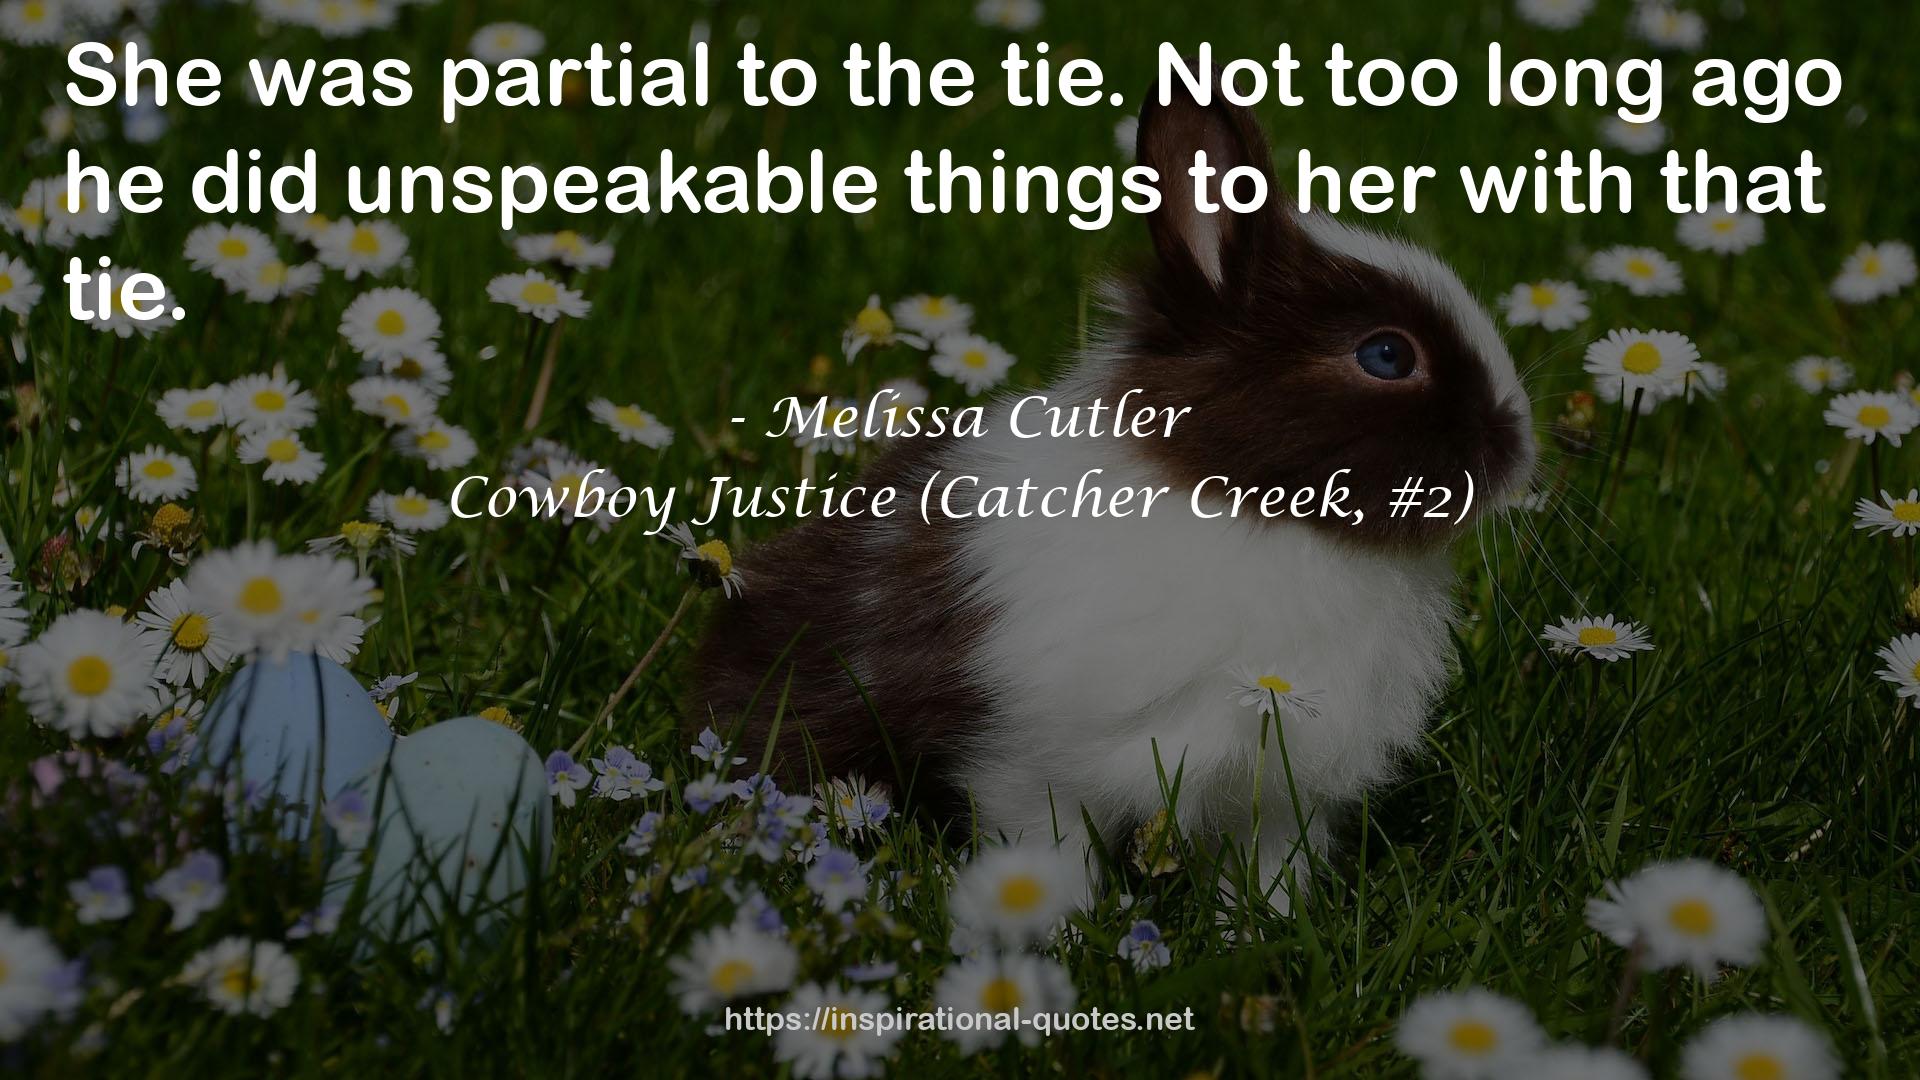 Cowboy Justice (Catcher Creek, #2) QUOTES